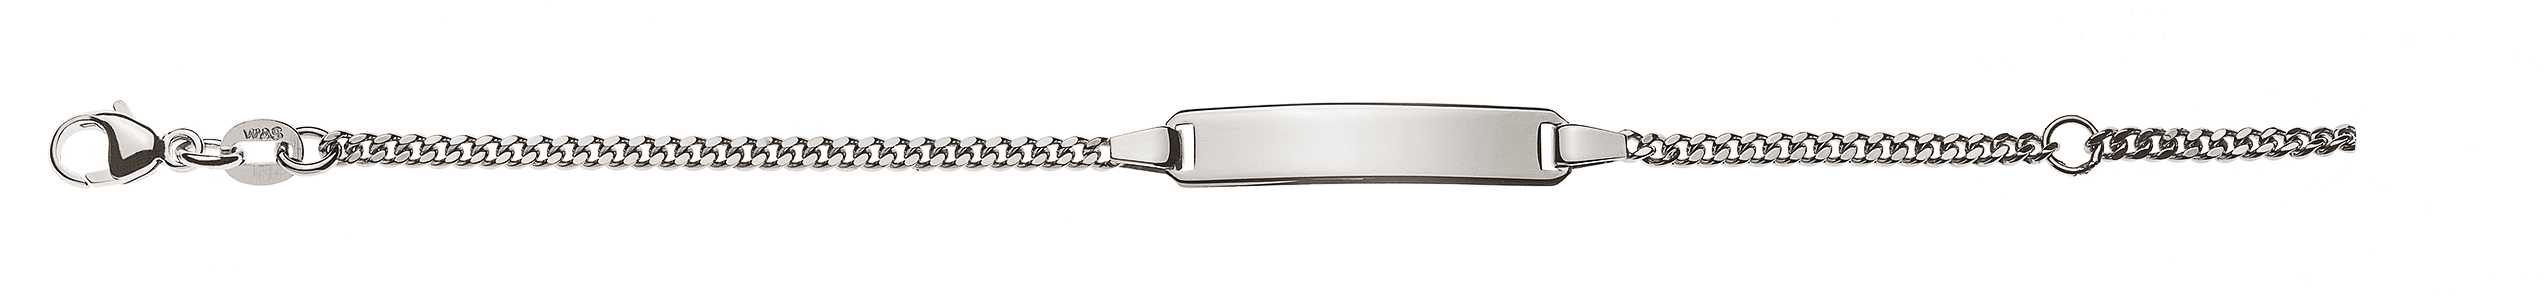 AURONOS Style ID-Bracelet en or blanc 9k Chaîne blindée 18cm